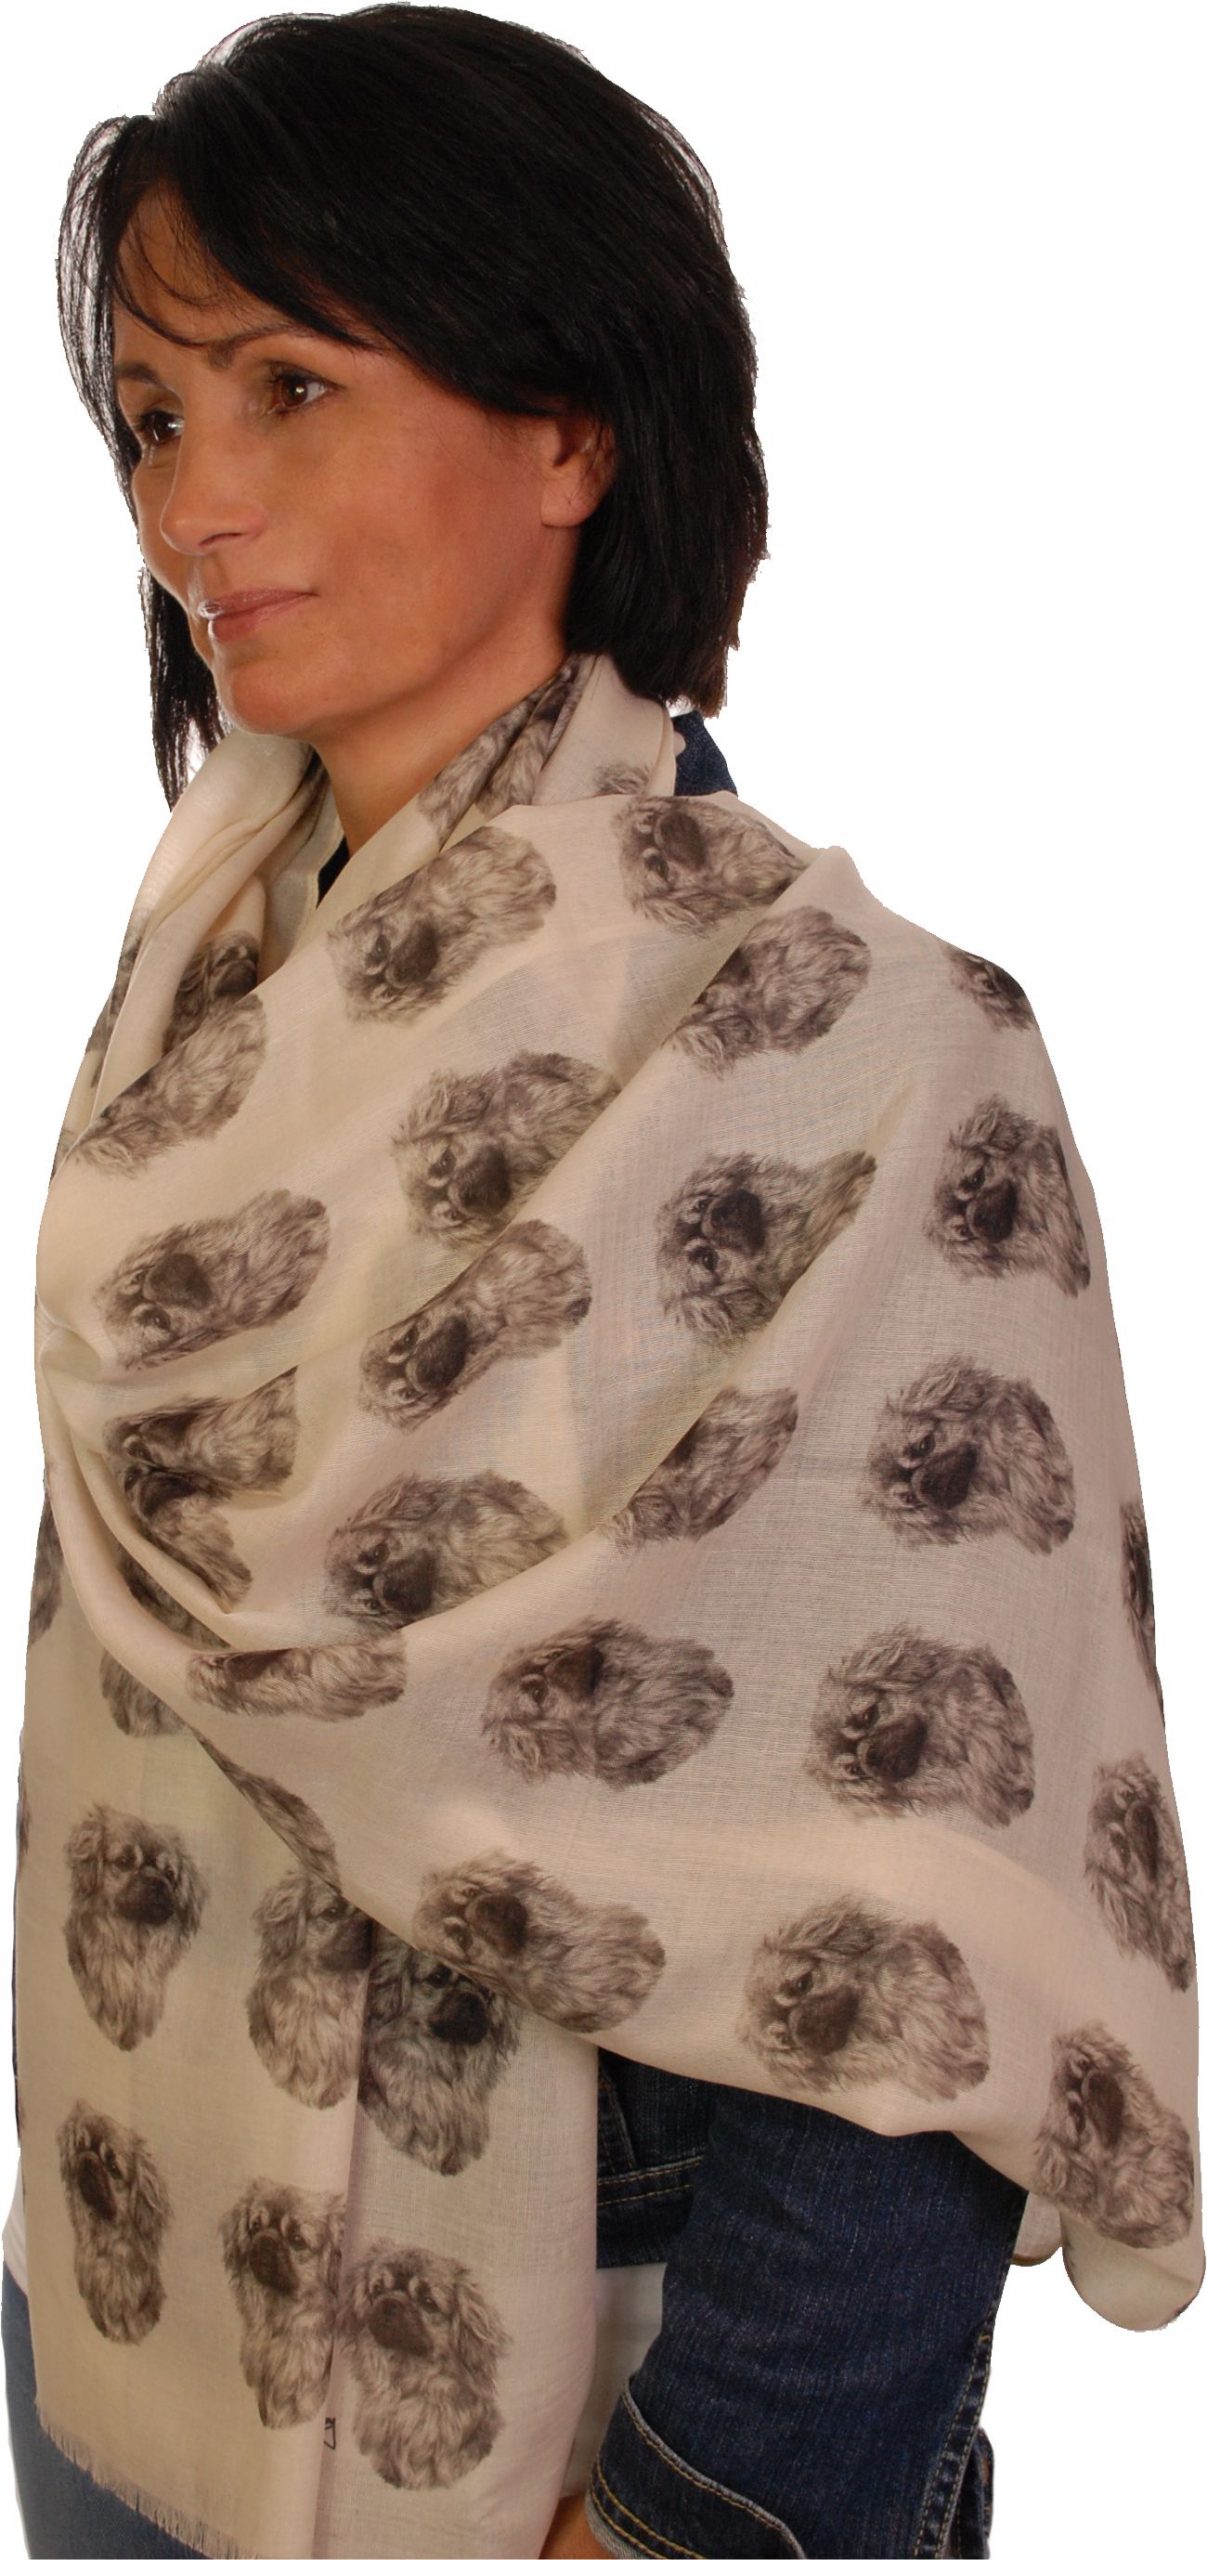 Mike Sibley Tibetan Spaniel licensed design ladies fashion scarf